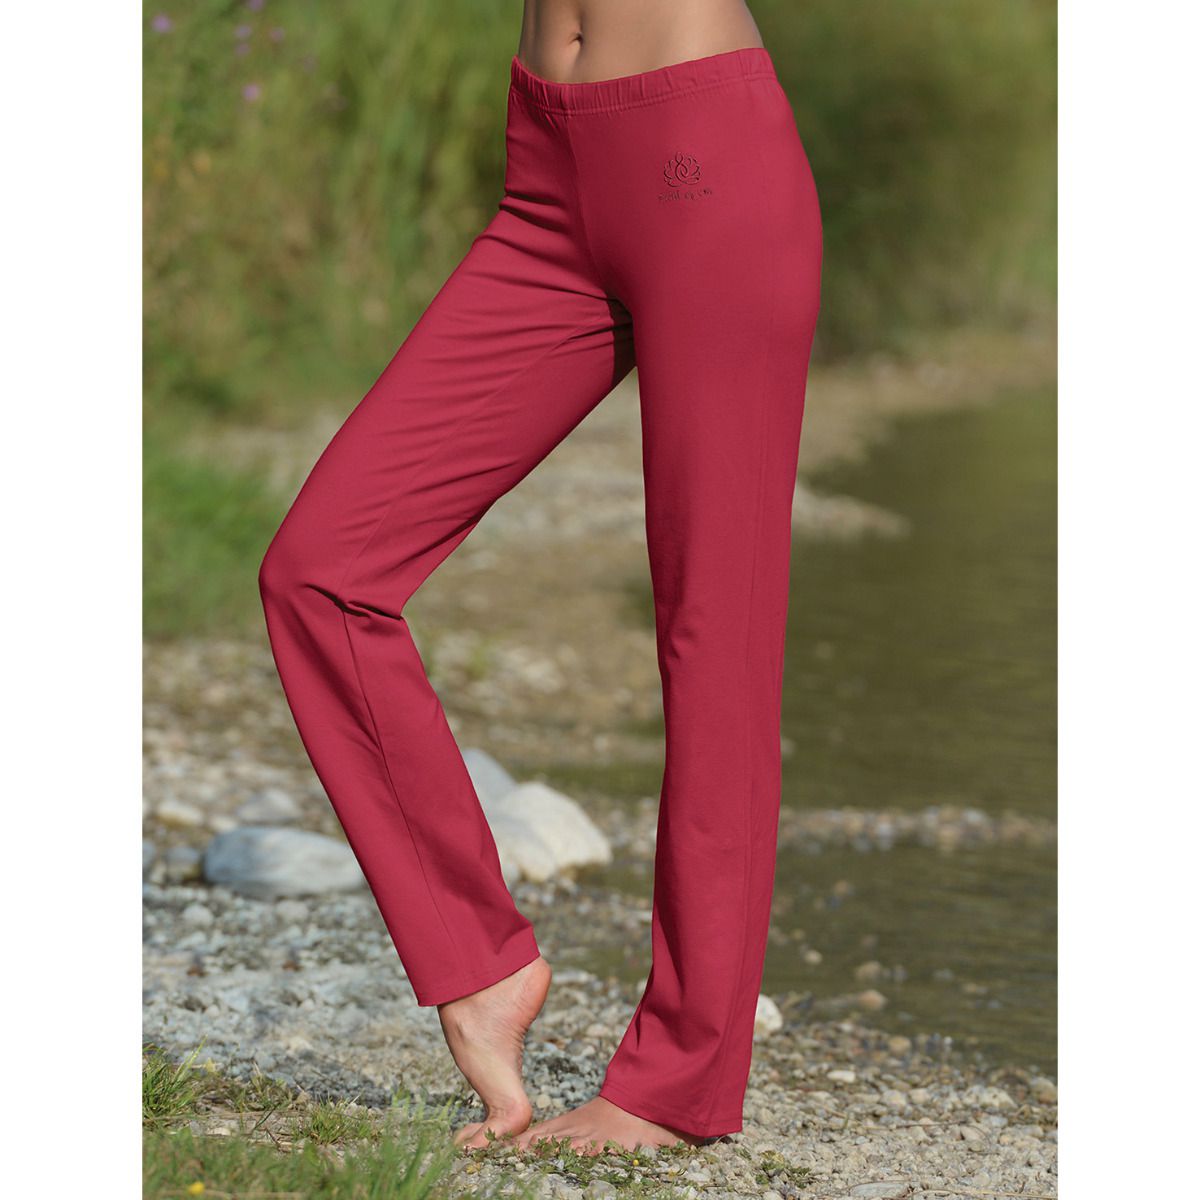 Yoga Pants Wellness roses red - The Spirit of OM - Yoga clothing